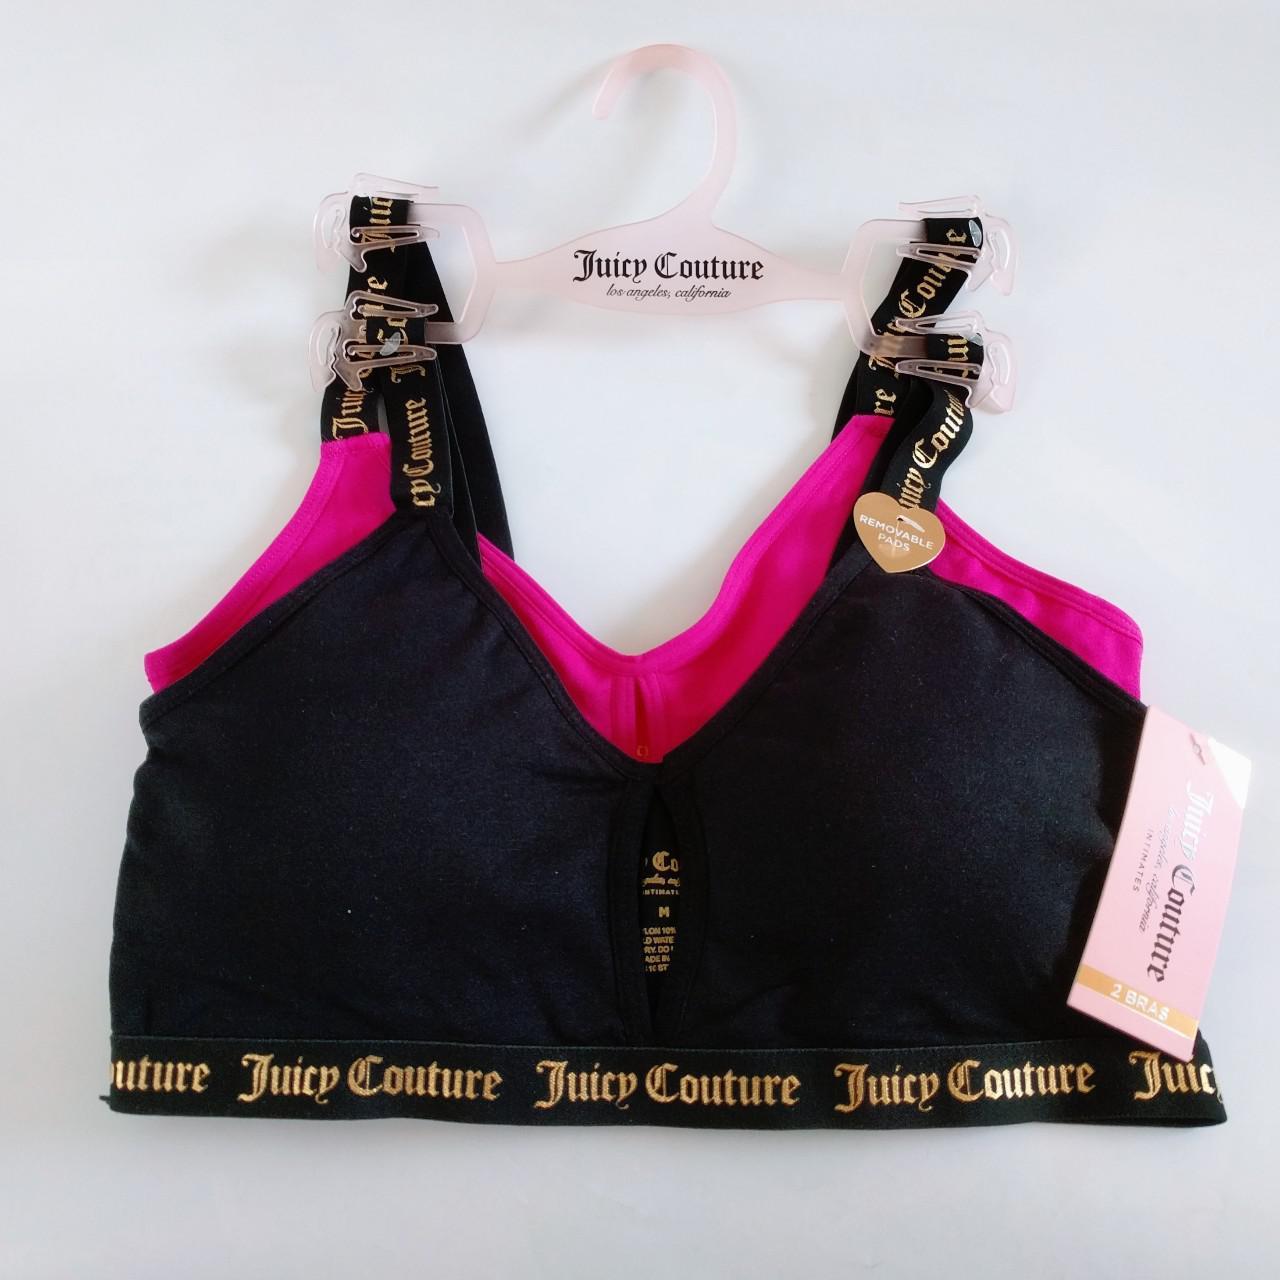 Juicy Couture, Intimates & Sleepwear, Nwot 42d Juicy Couture Bra